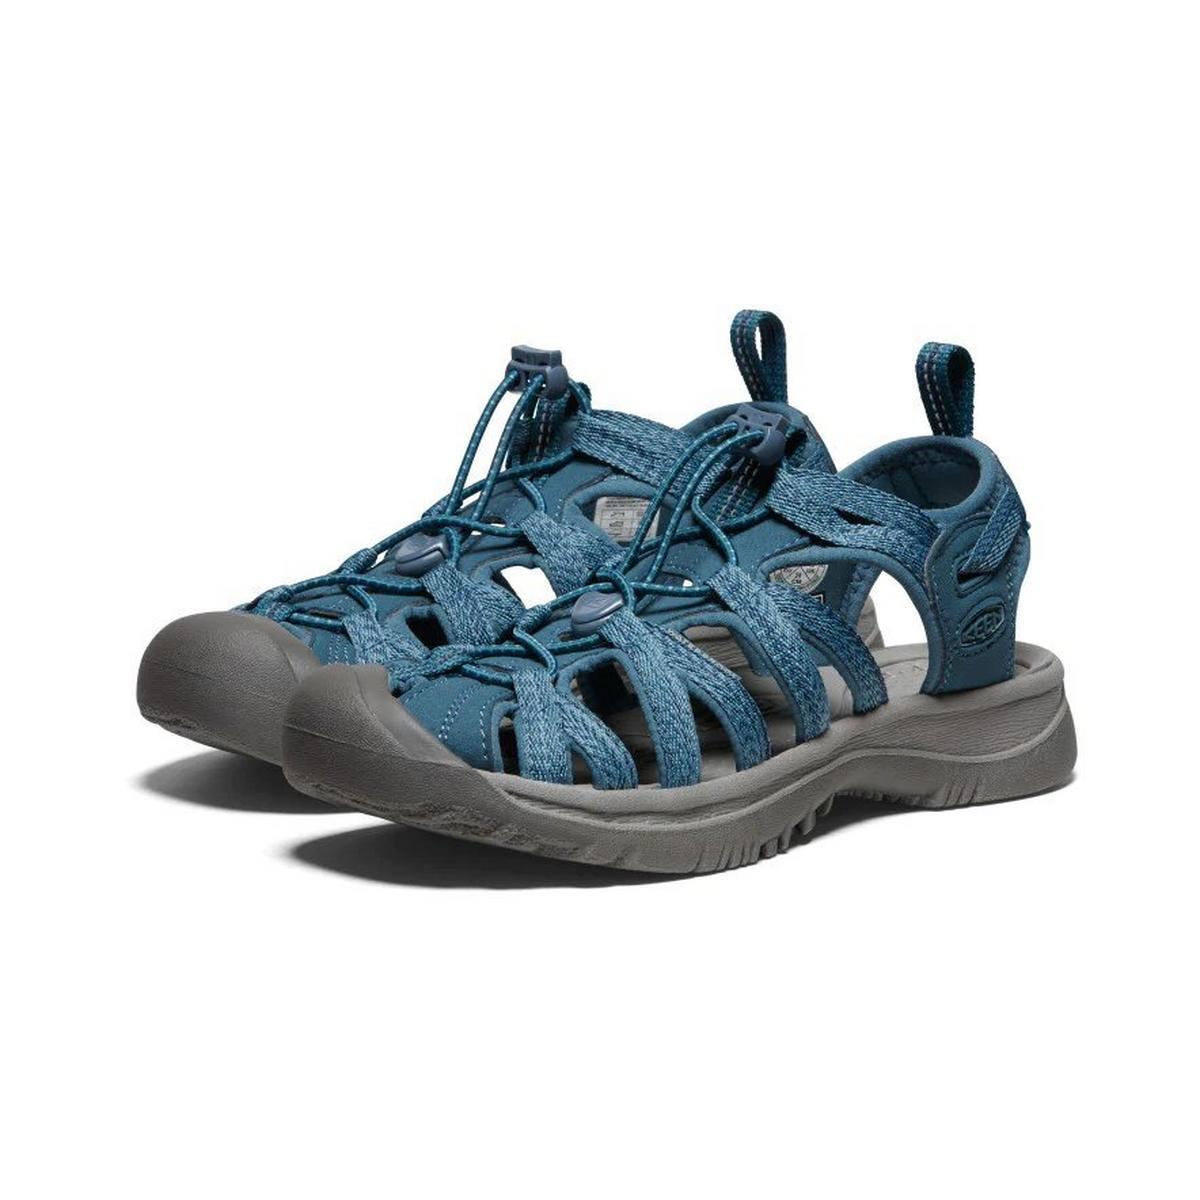 Keen Women's Whisper Sandals - Blue